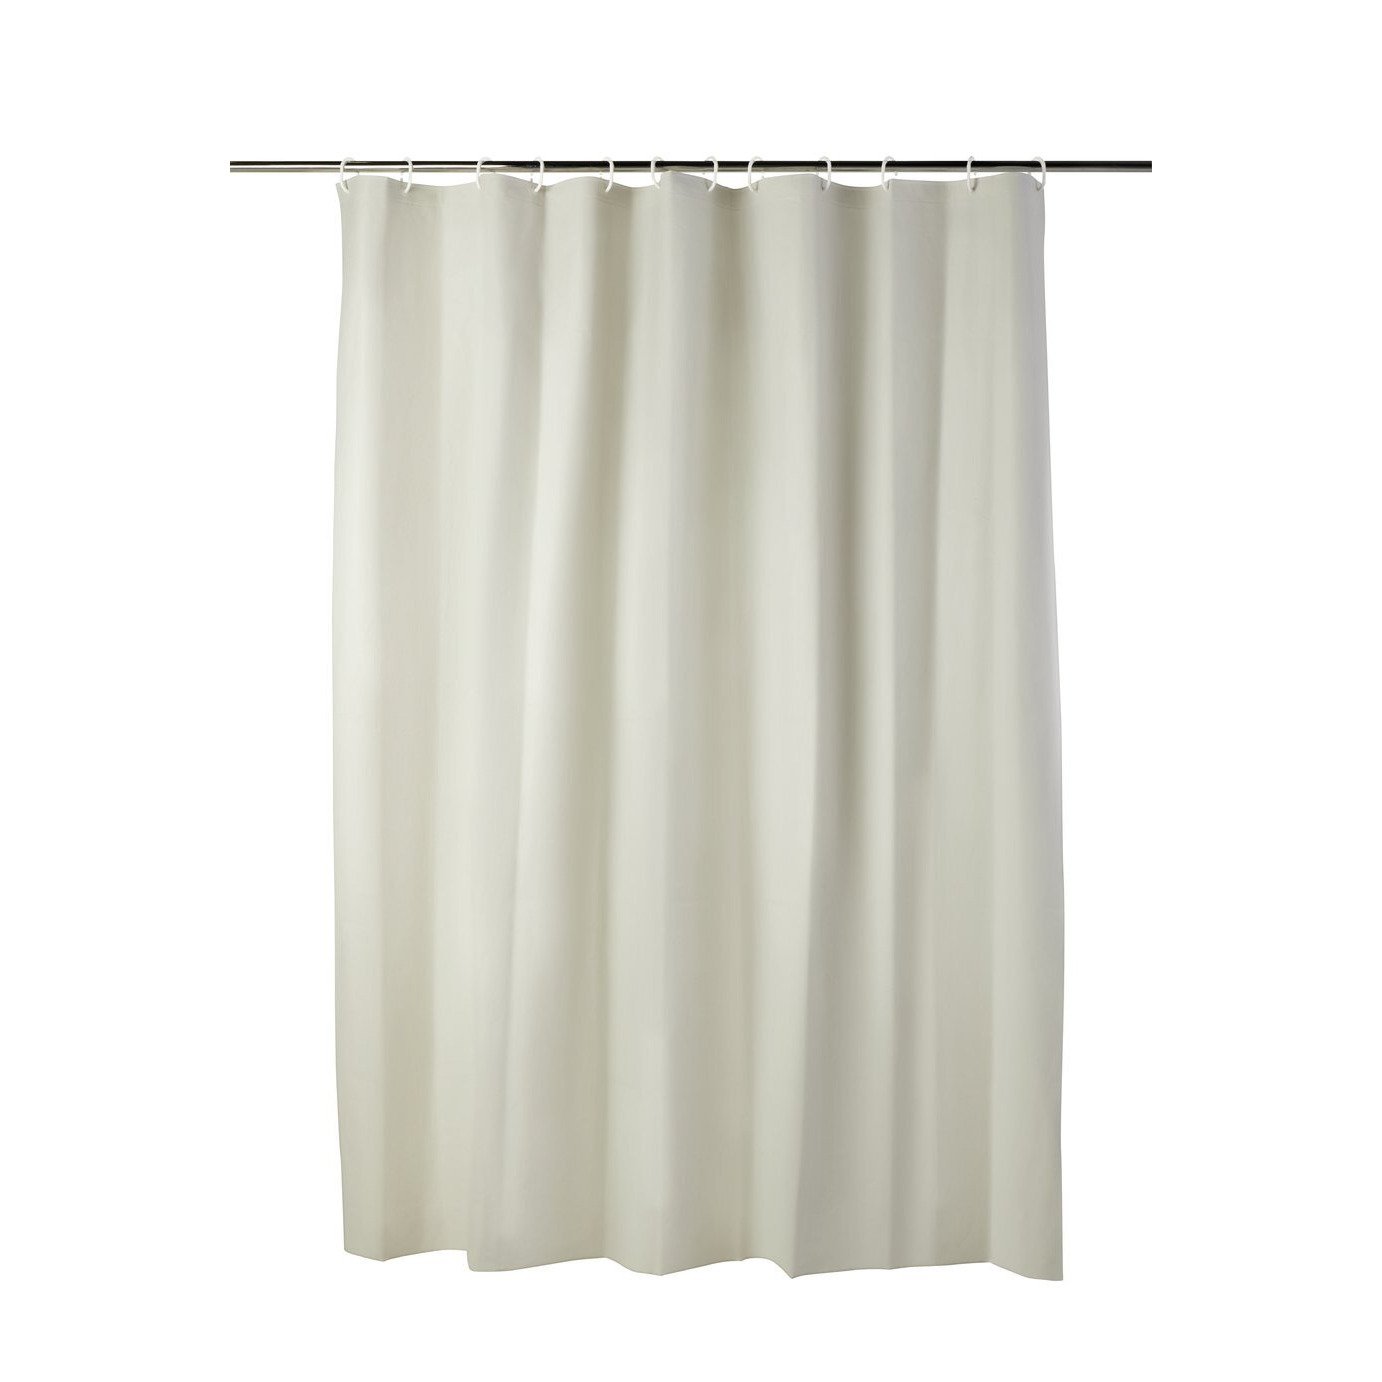 Argos Home PEVA Plain Shower Curtain - Grey - image 1